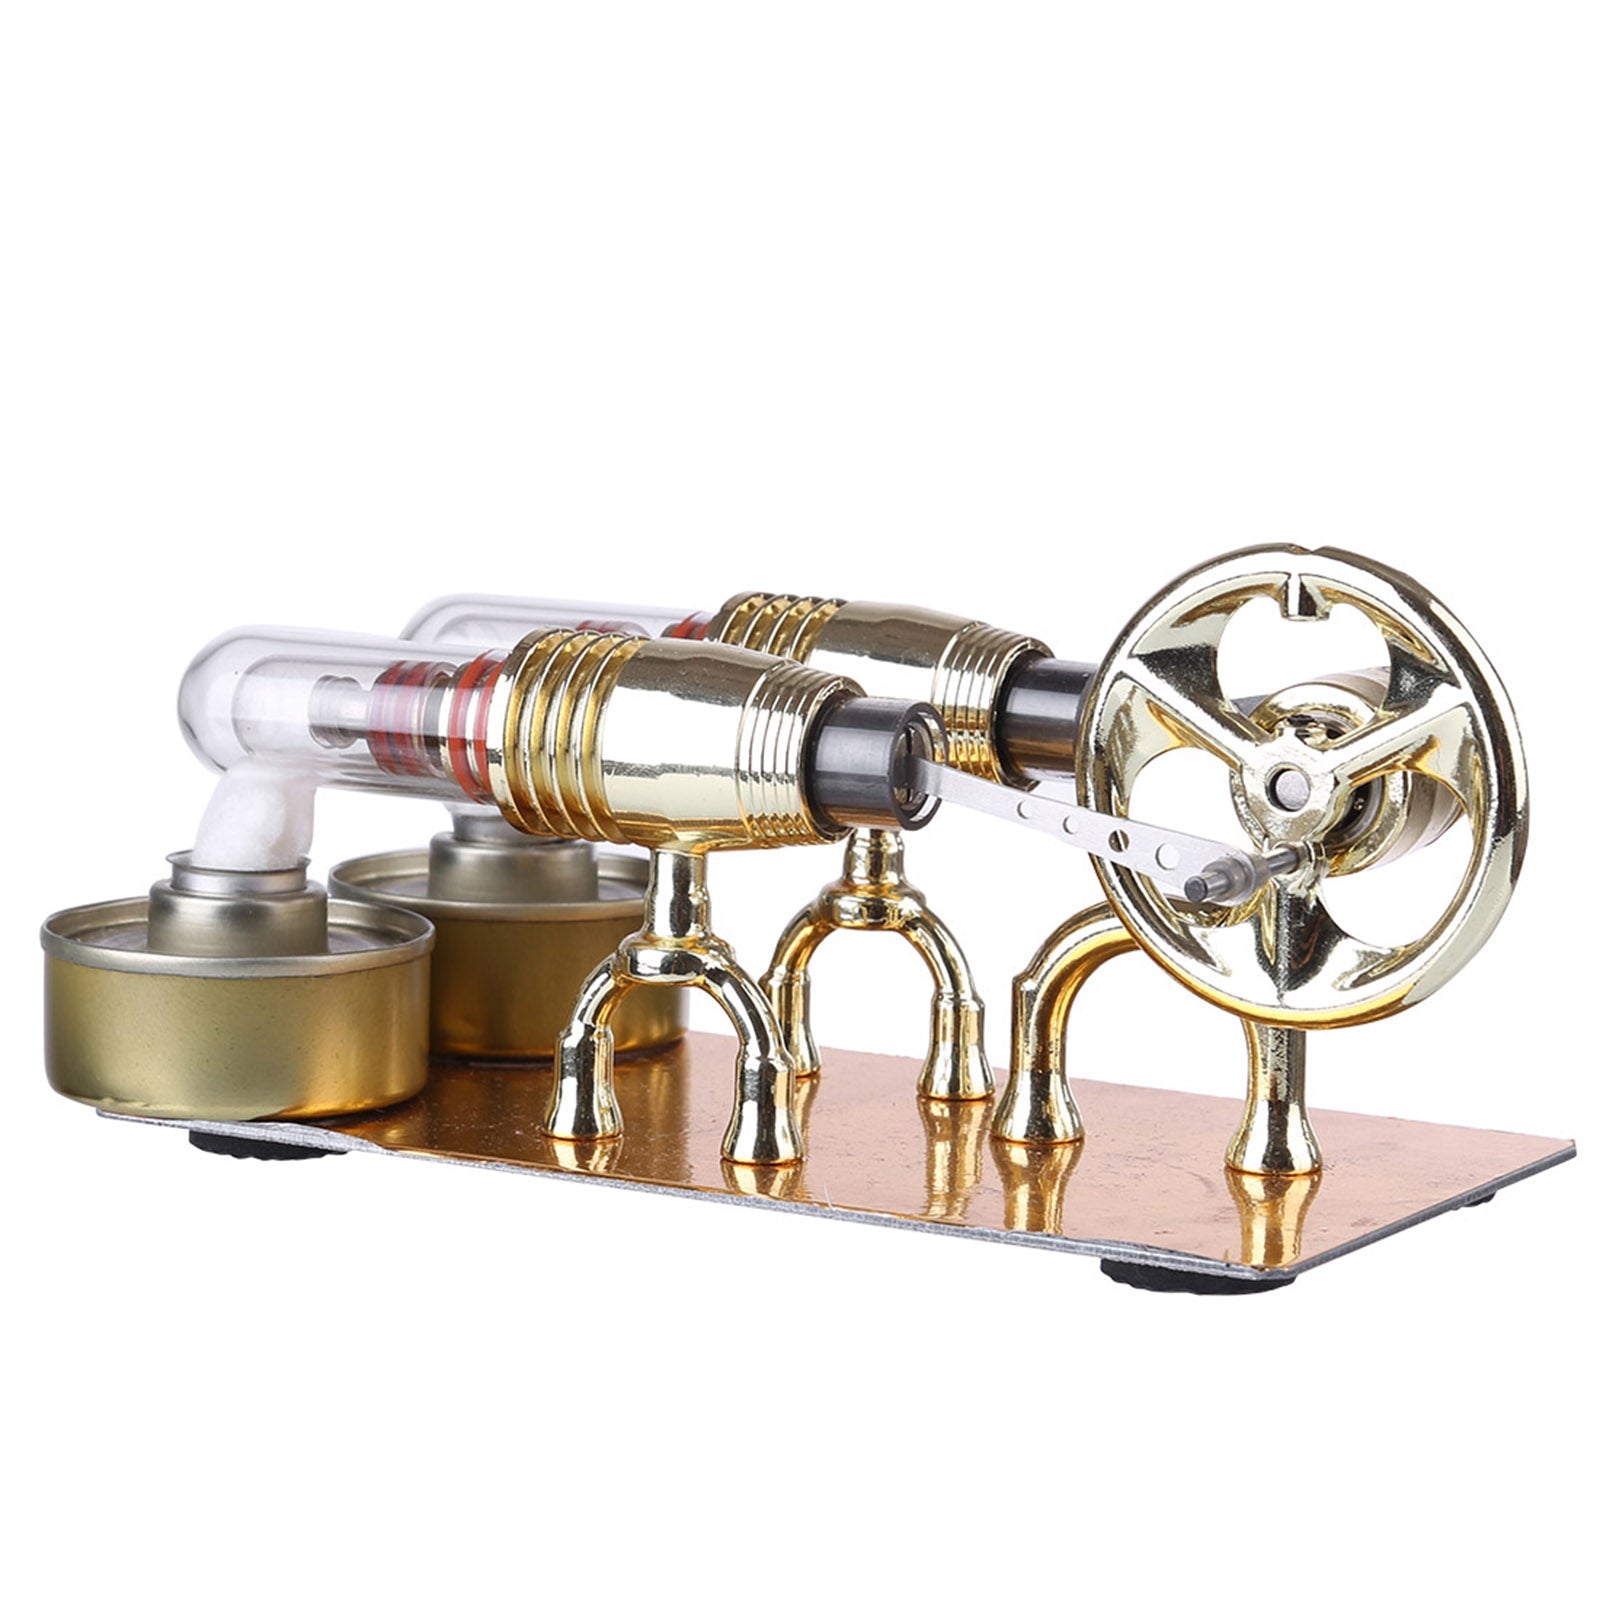 2 Cylinder Stirling Engine Model Engine Teaching Show Model Science Educational Toys - Golden - enginediy